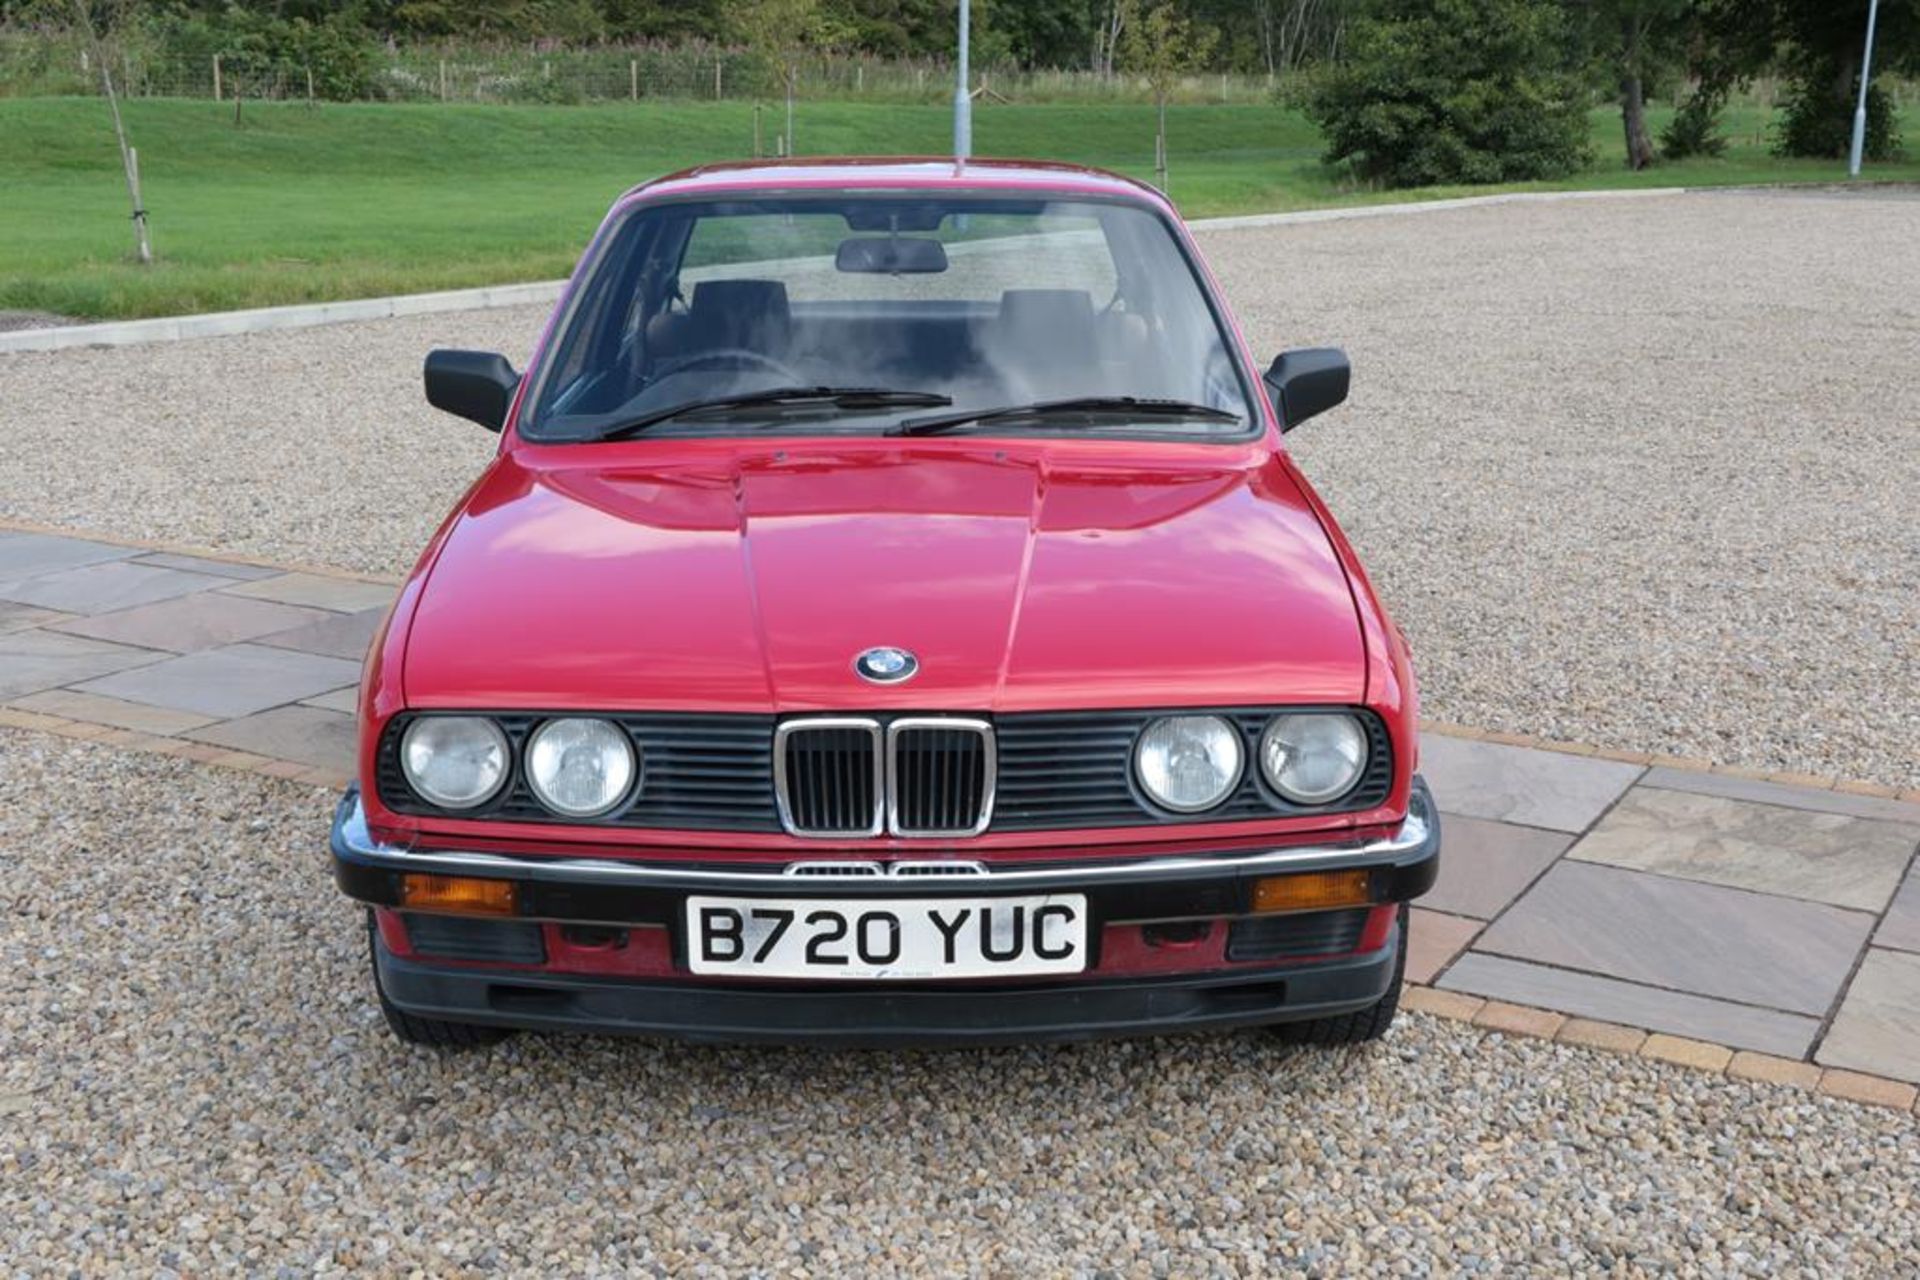 1985 BMW 320I Automatic Registration number: B720 YUC Date of first registration: 15/03/1985 VIN - Bild 2 aus 7